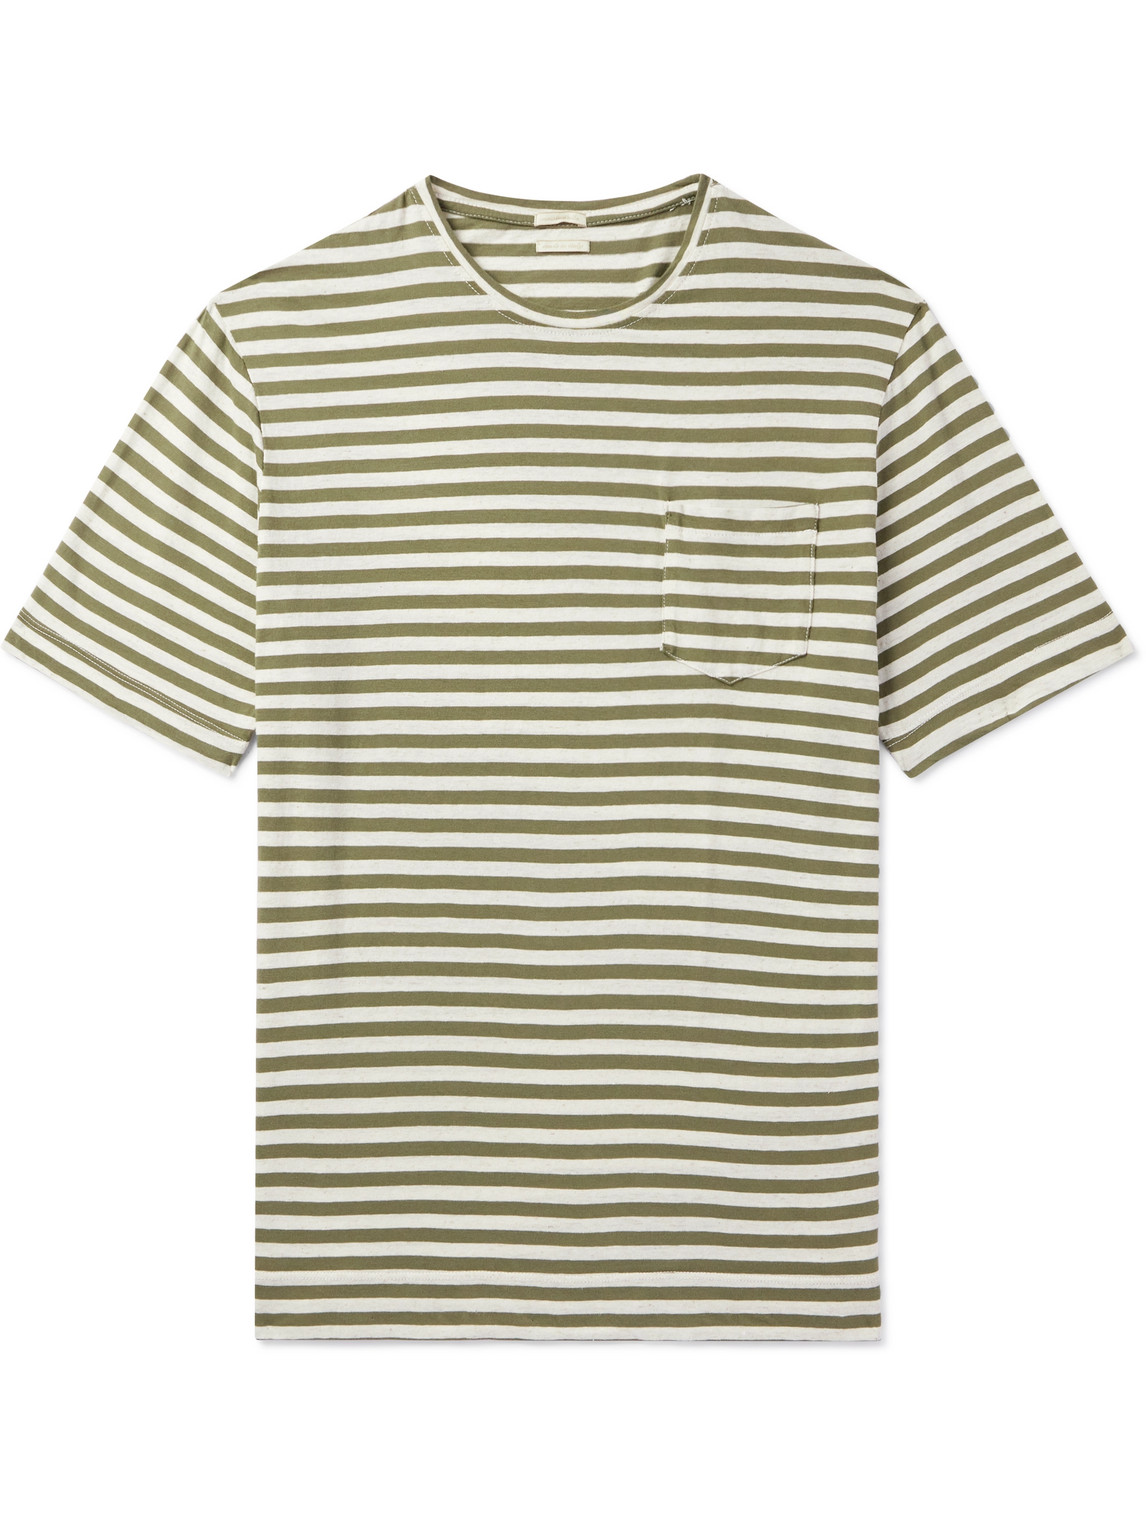 Massimo Alba - Panarea Striped Cotton and Linen-Blend T-Shirt - Men - White - M von Massimo Alba